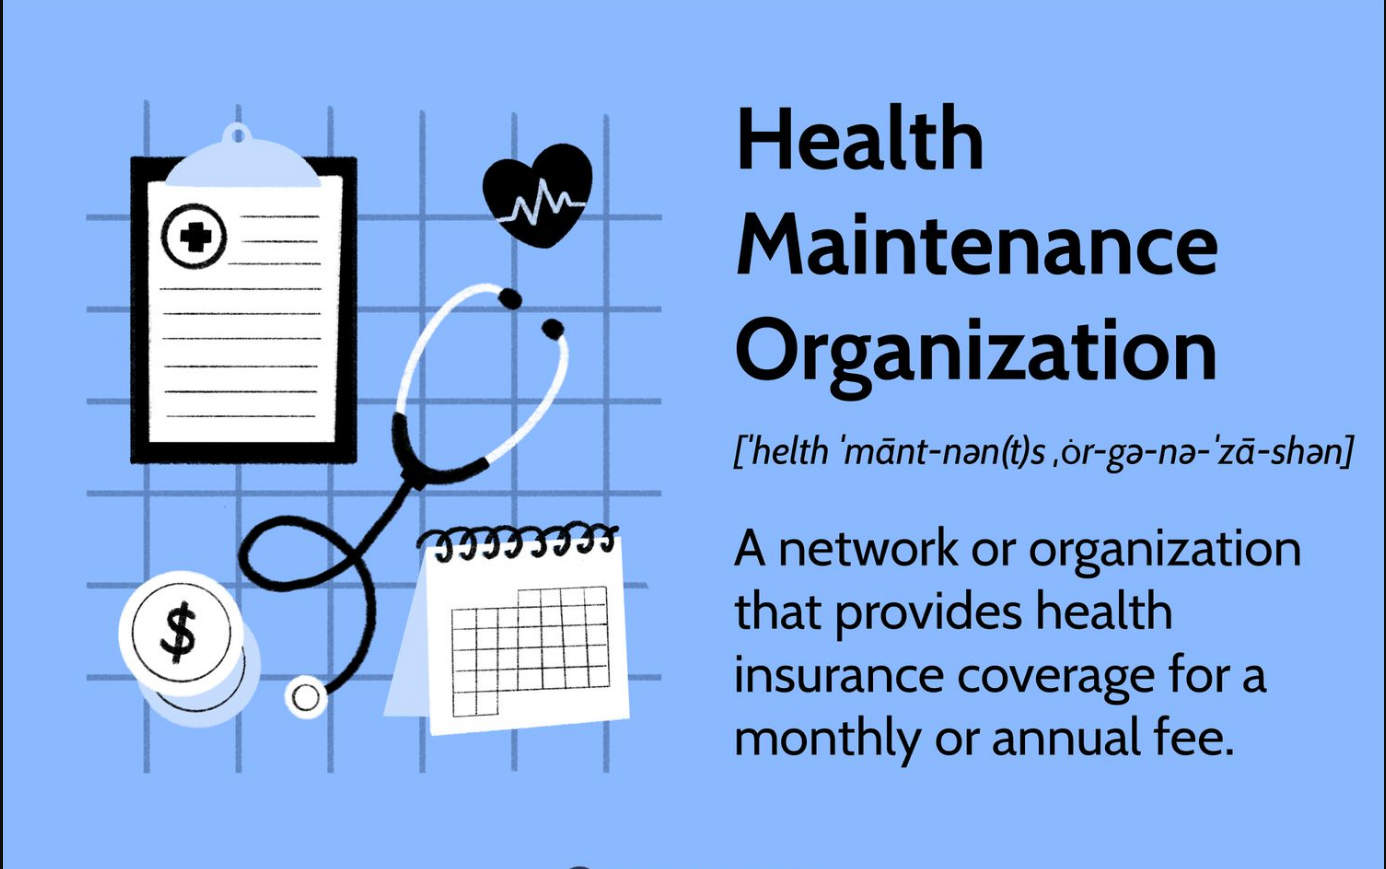 An illustartion of medical stuff and "health maintenance organization" written on a blue background